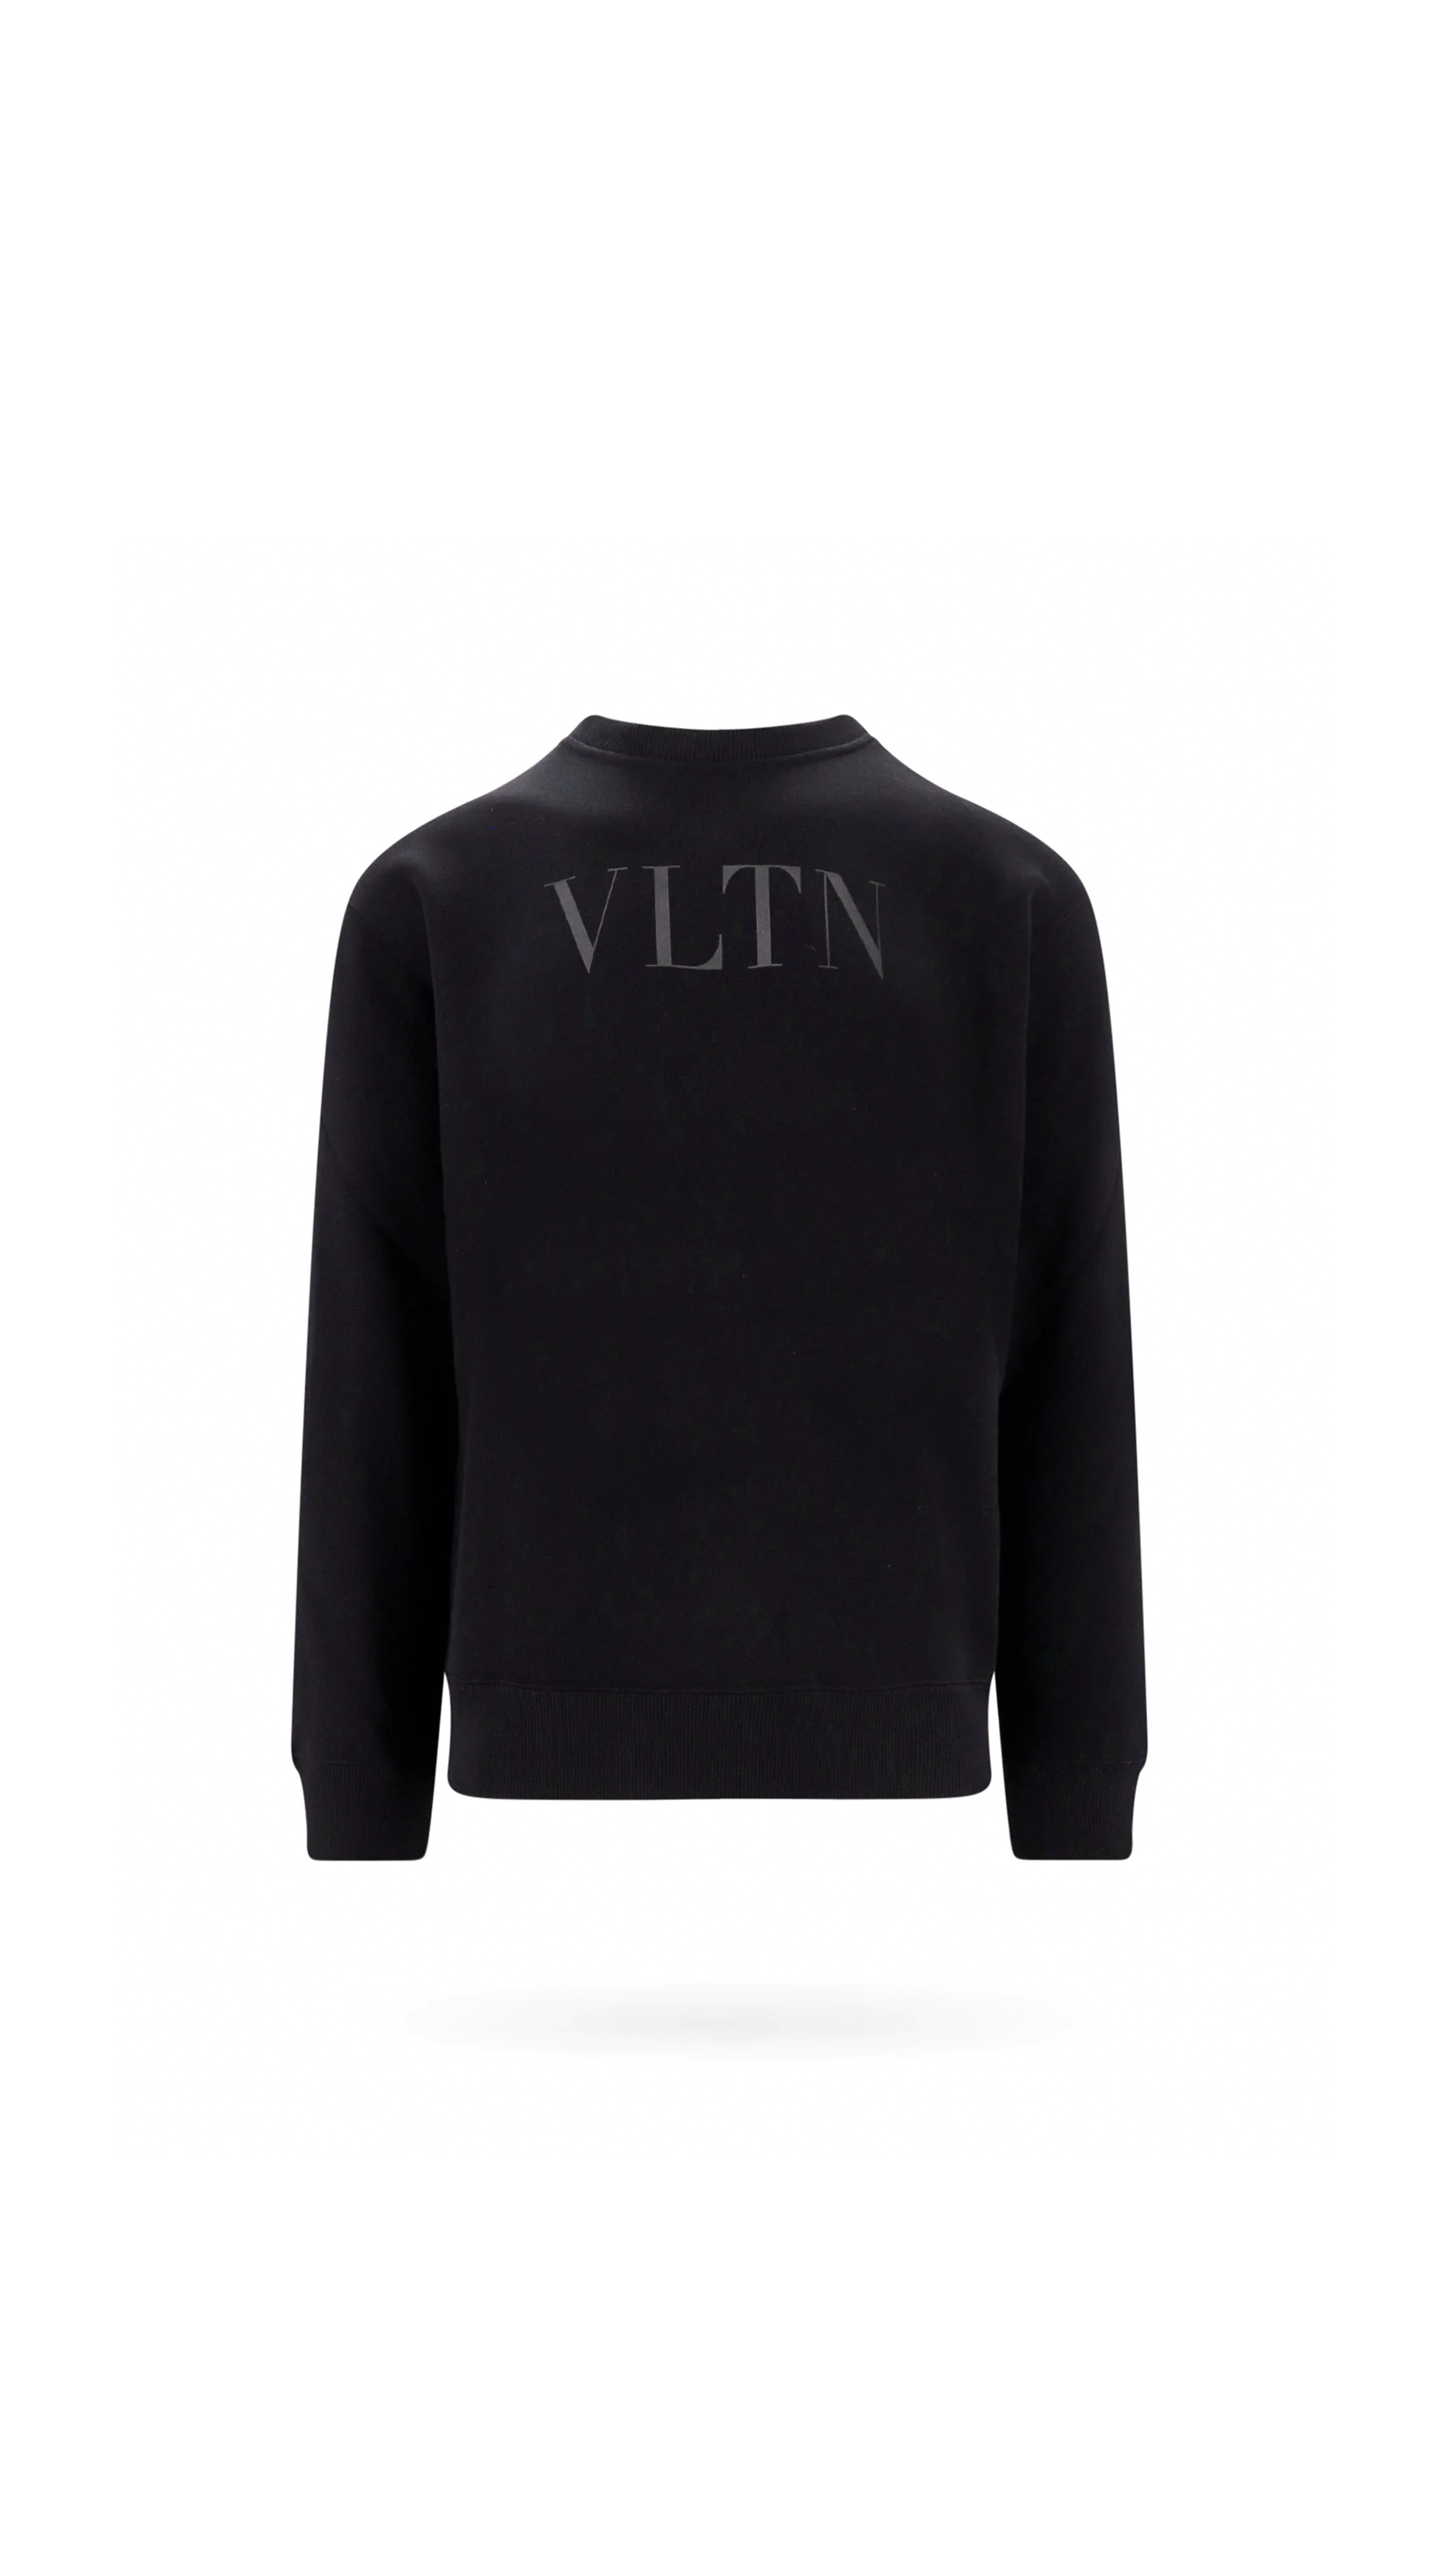 Cotton Crewneck Sweatshirt with VLTN Print - Black